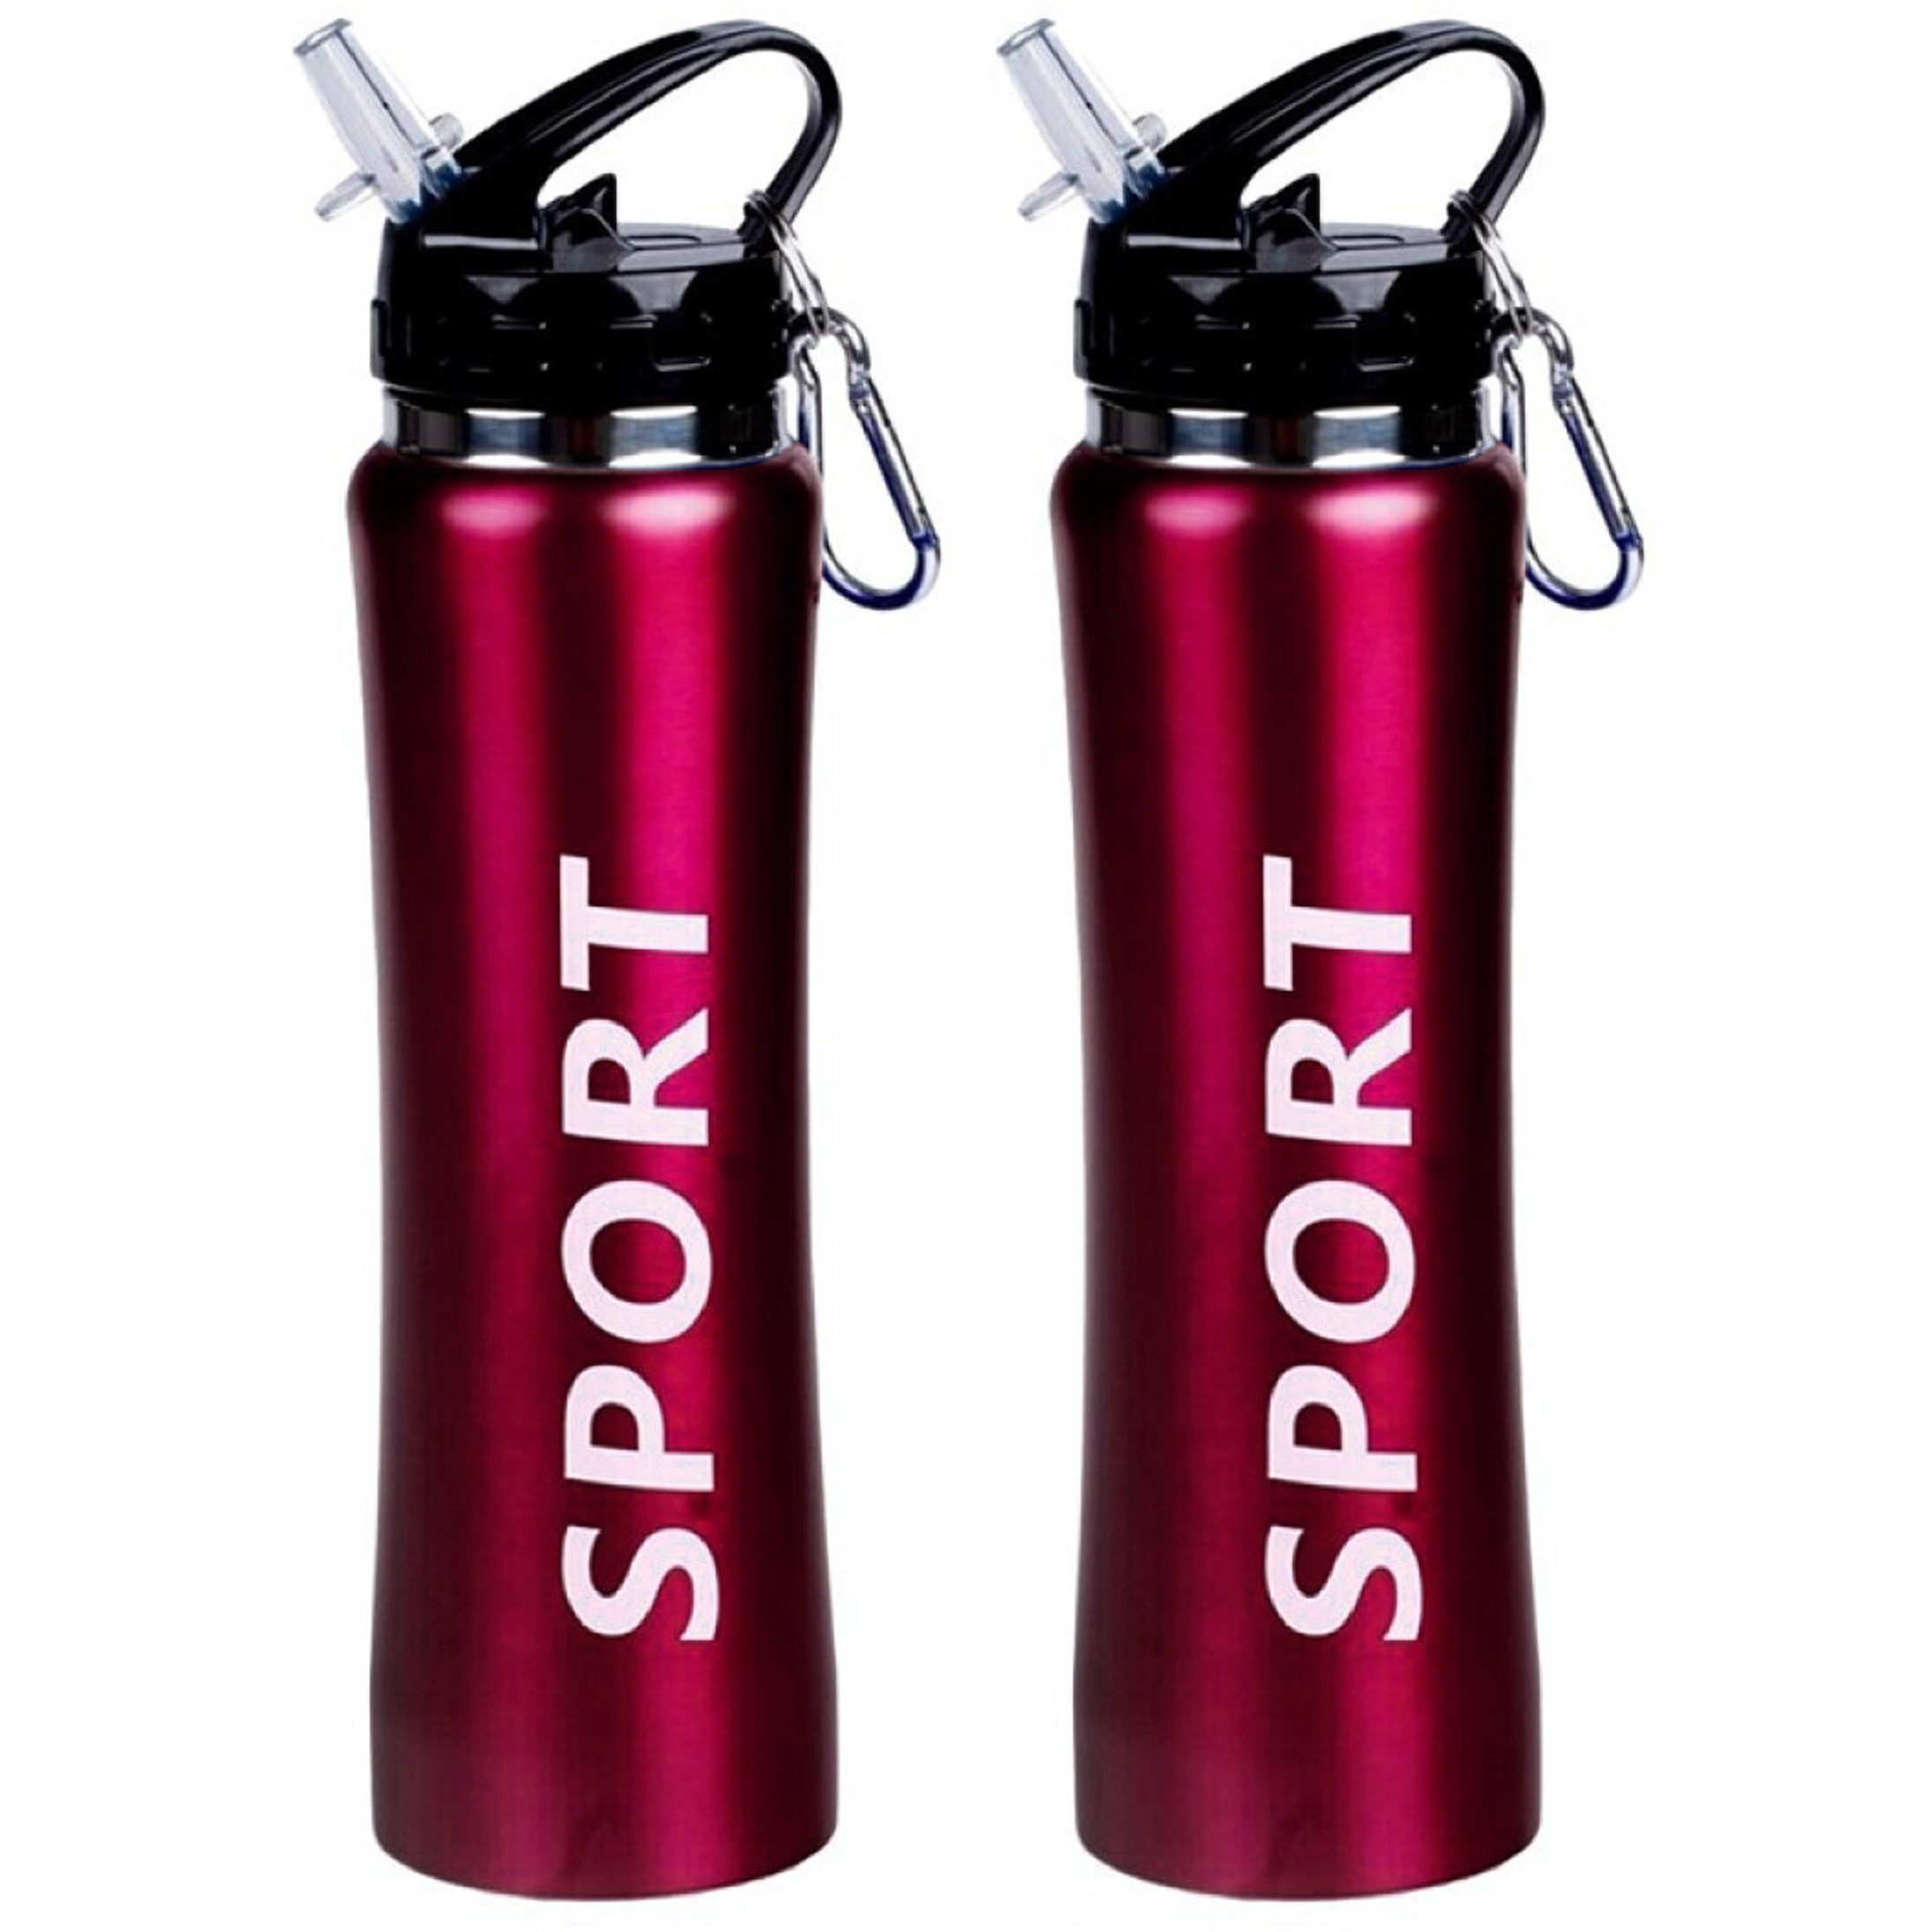 2x Sport Bidon drinkfles/waterfles Sport print rood 600 Ml van Aluminium met karabijnhaak